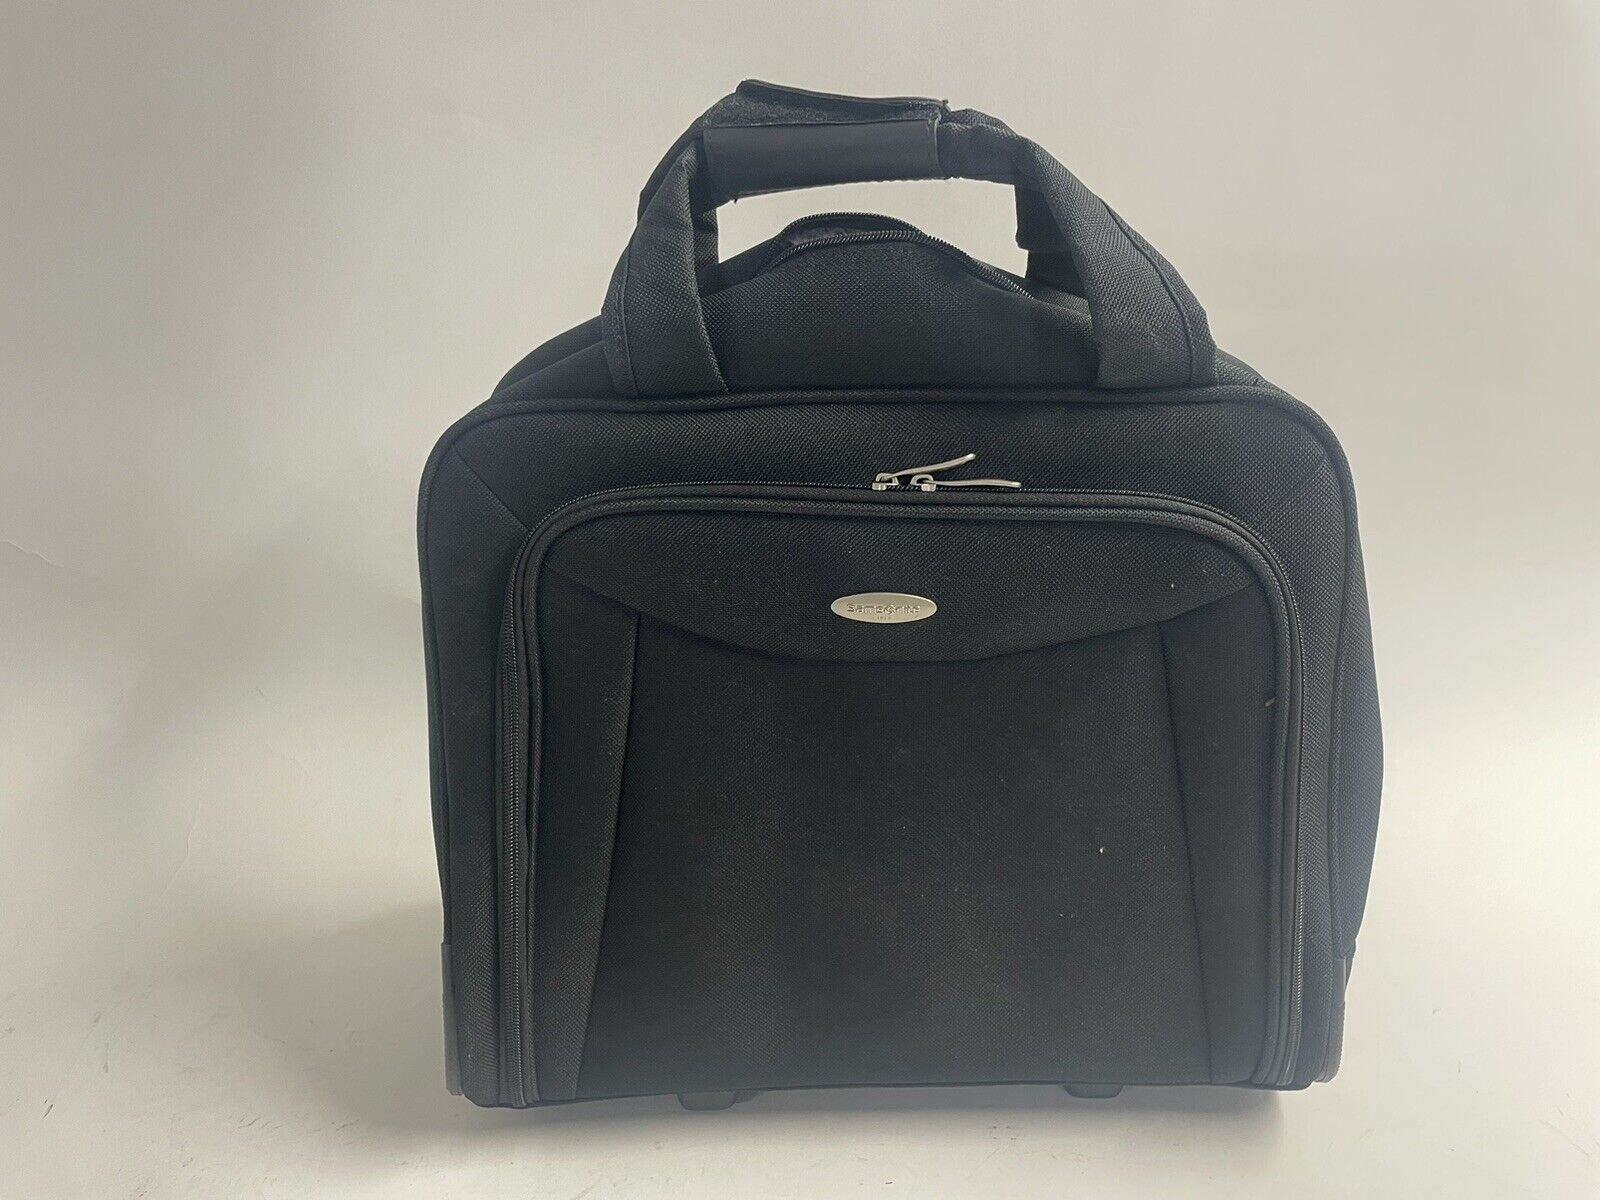 Samsonite Suitcase Bag Black Travel Rolling Retractable Handle Wheels Excellent